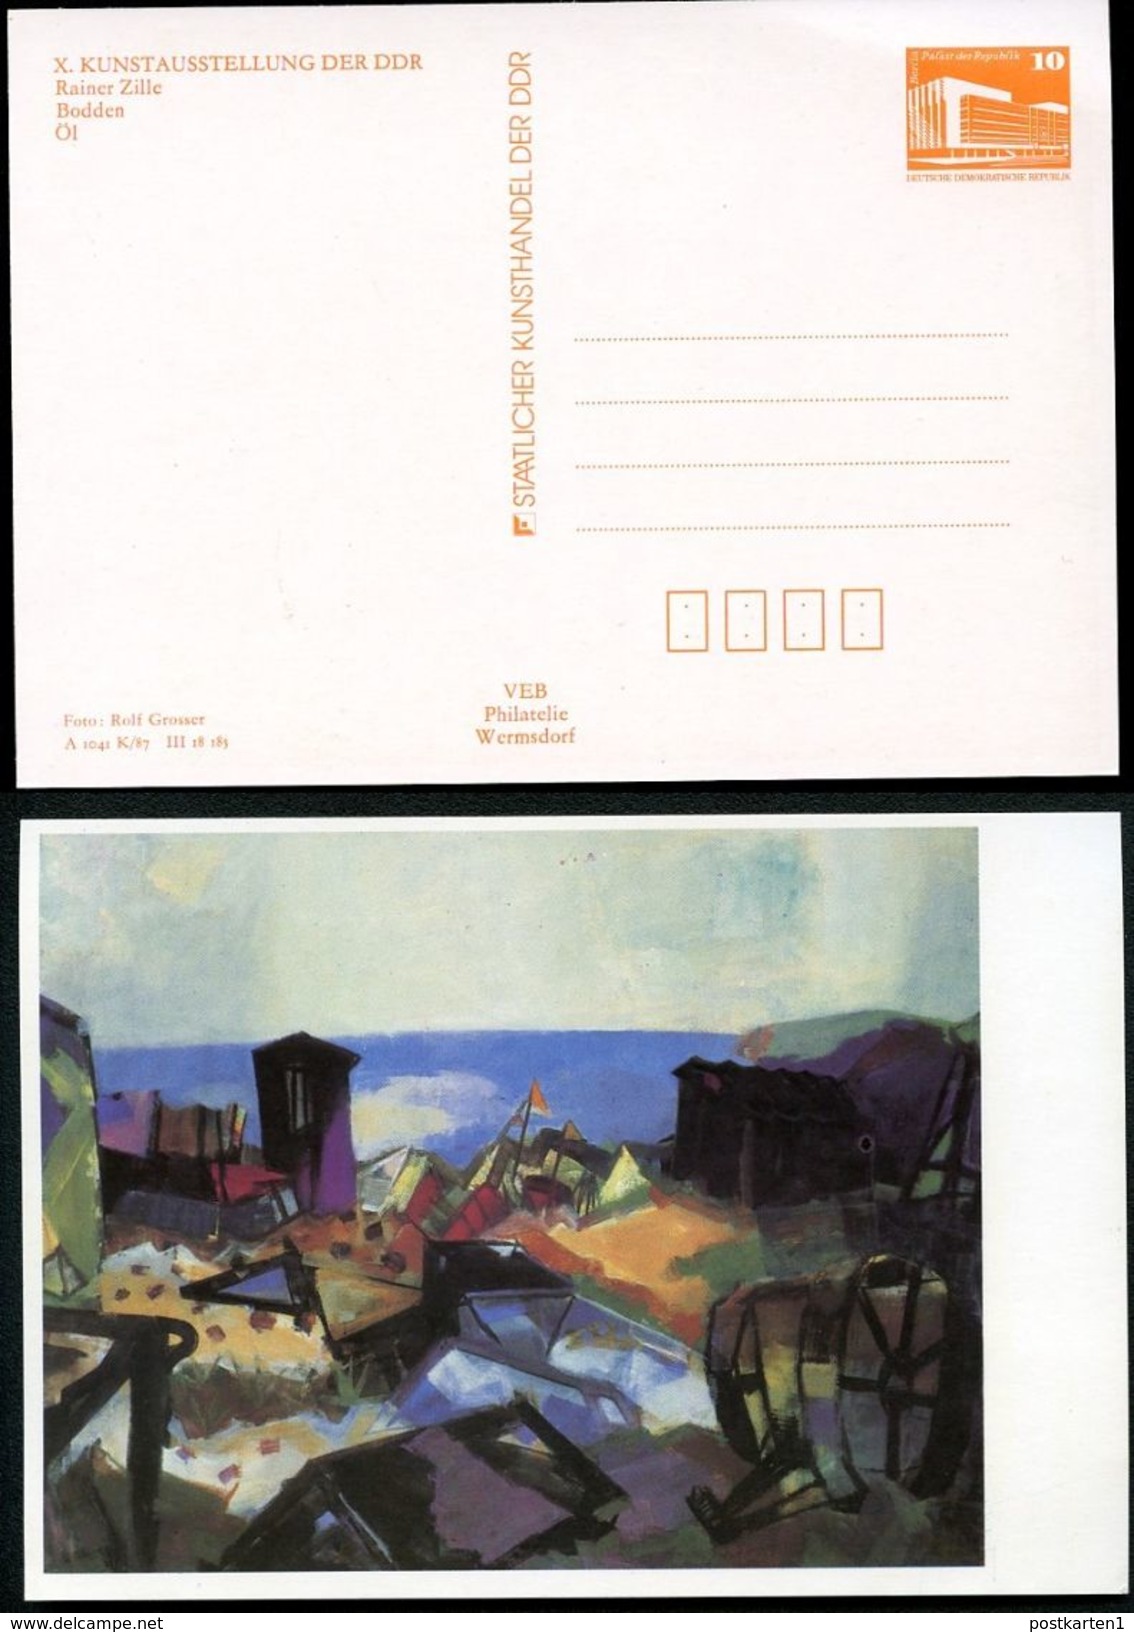 DDR Privat-Postkarte PP19 B1/005-1b KUNSTAUSSTELLUNG DRESDEN 1987 NGK 3,00 € - Private Postcards - Mint